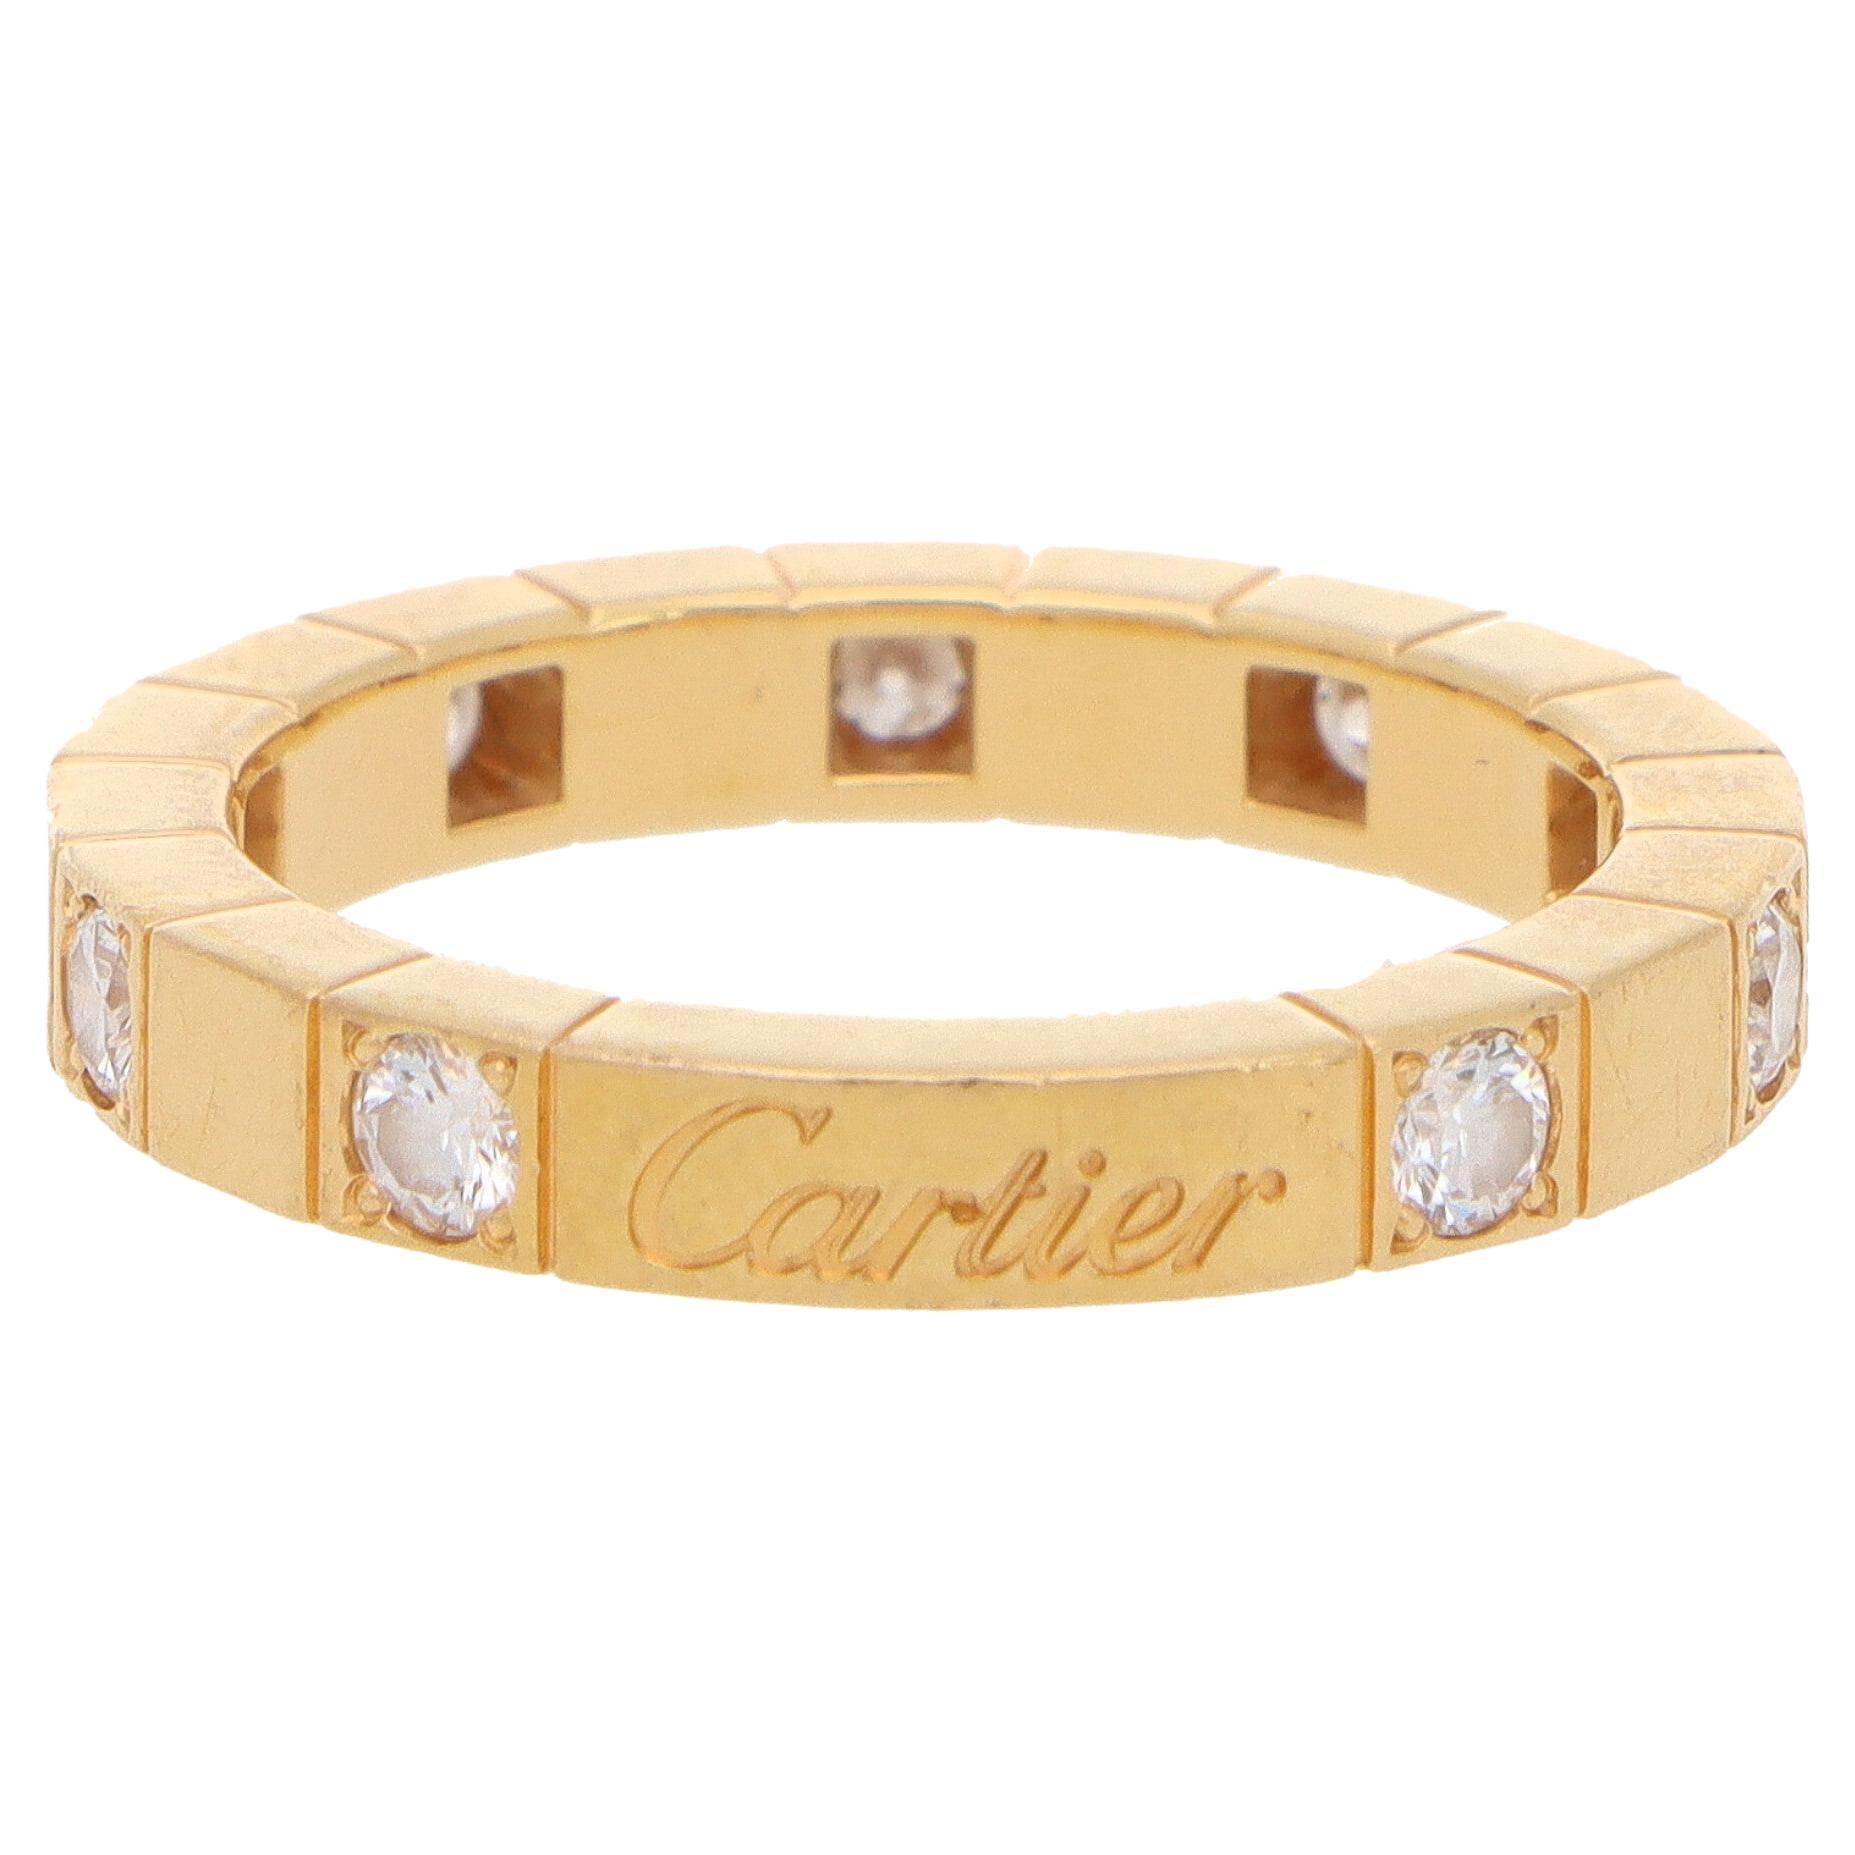 Vintage Cartier Lanières Diamond Eternity Band Ring Set in 18k Rose Gold